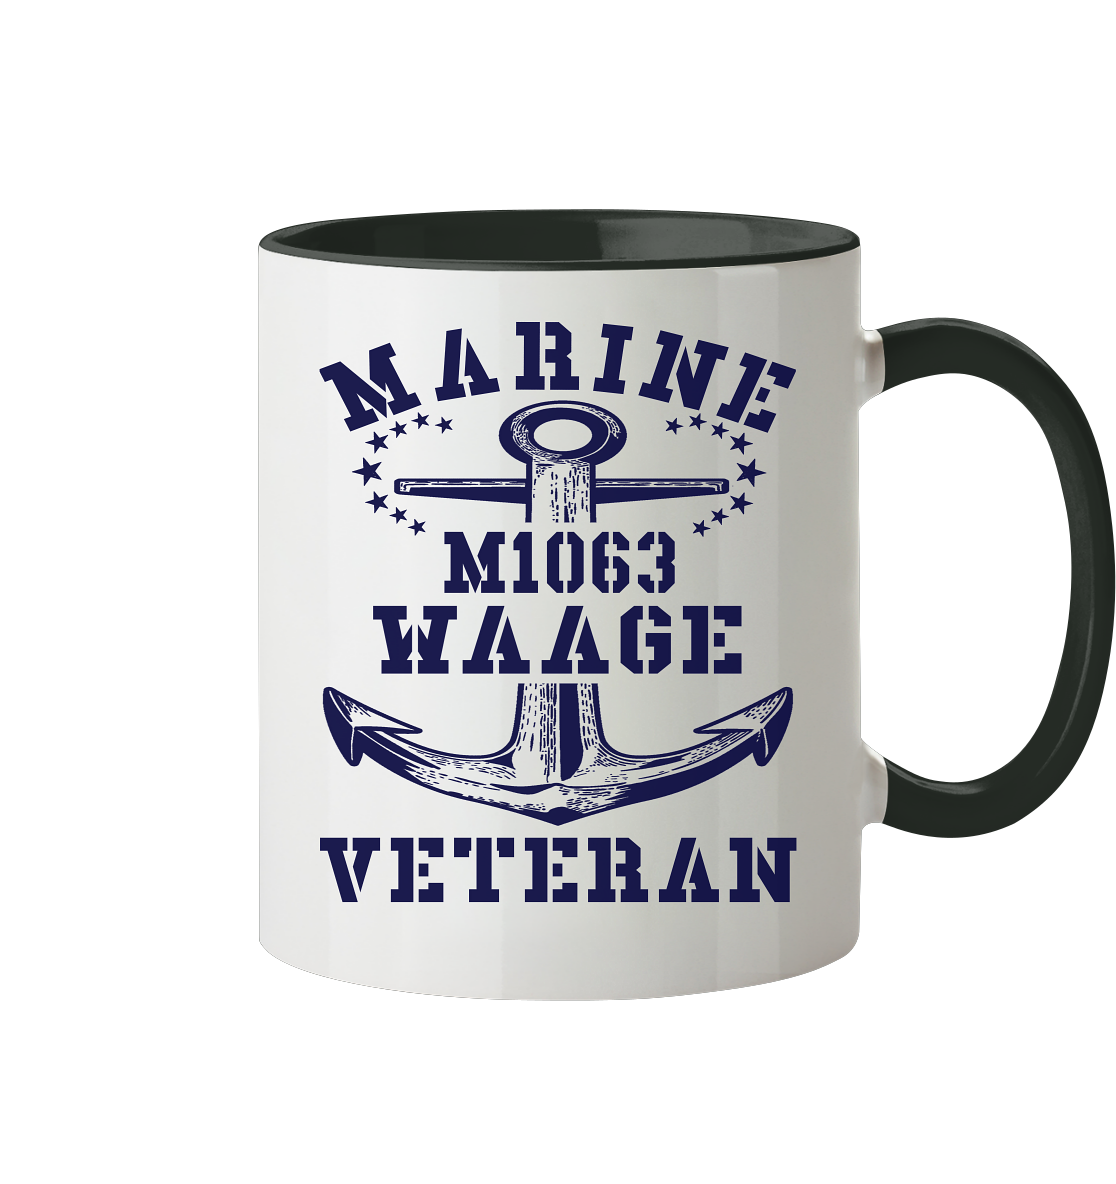 SM-Boot M1063 WAAGE Marine Veteran - Tasse zweifarbig